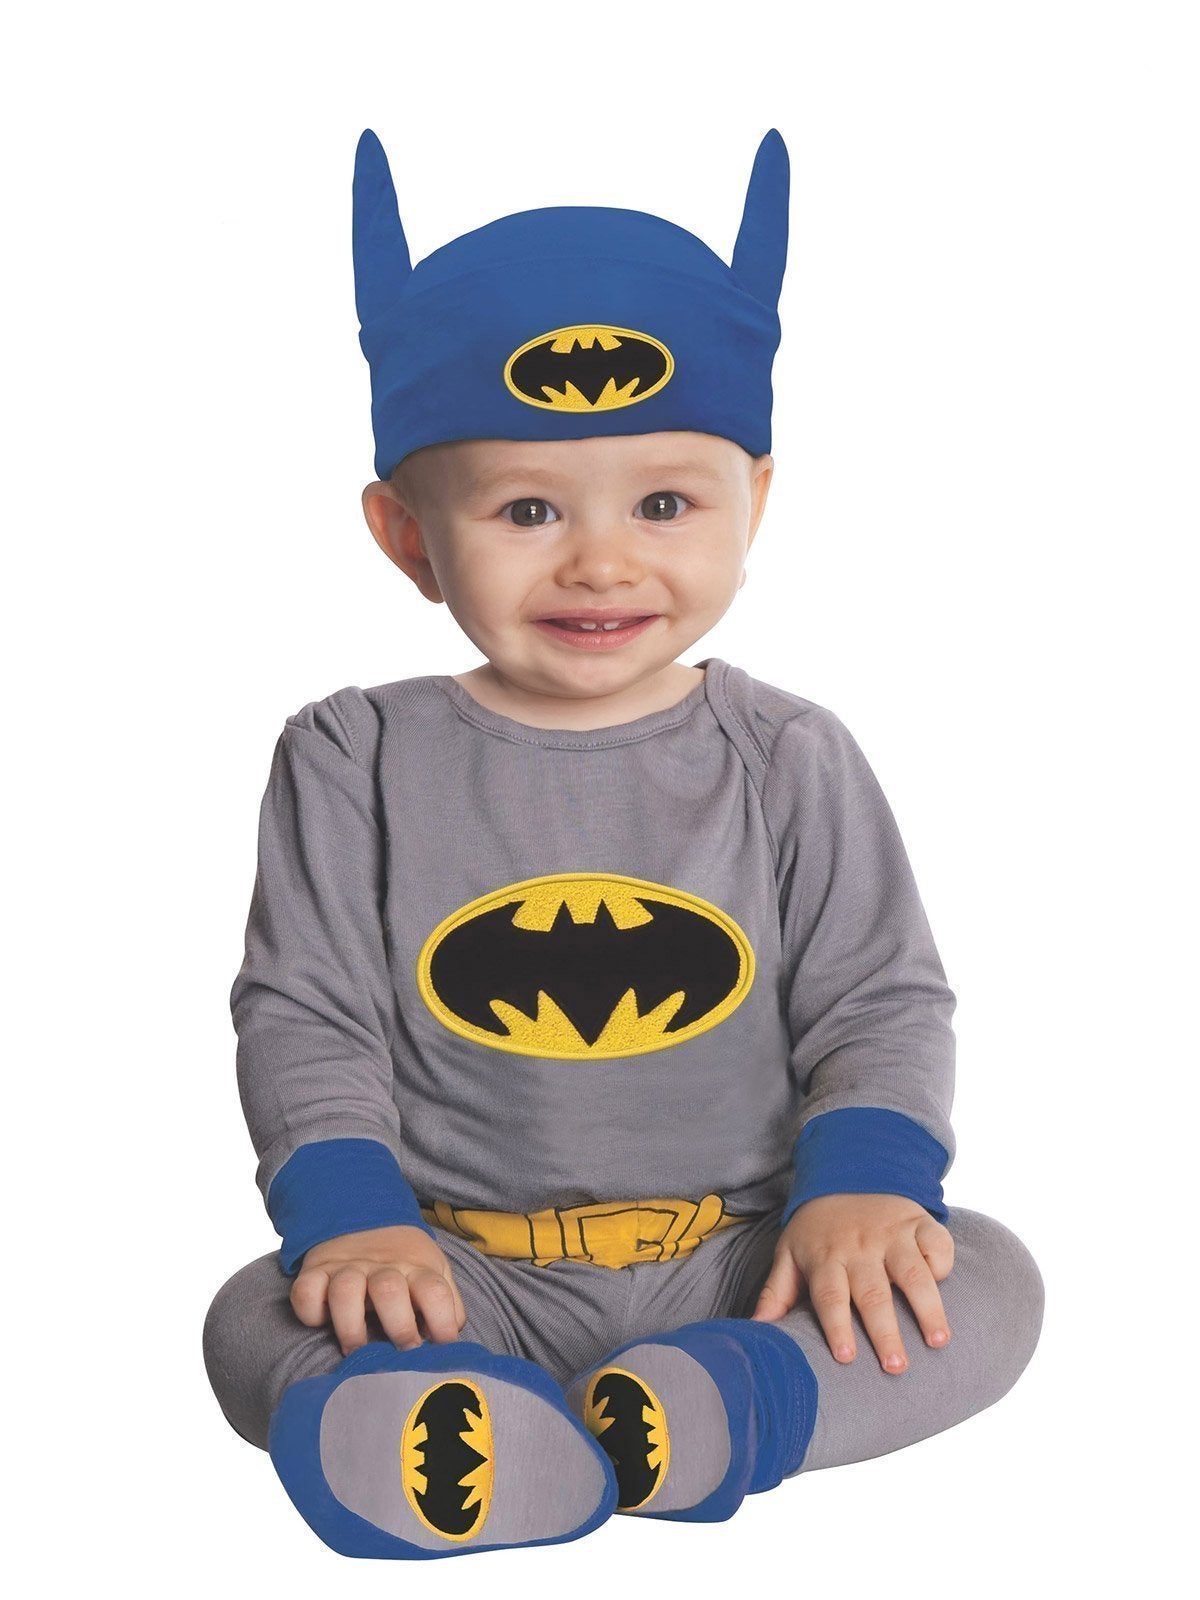 Batman Onesie Costume for Babies - Warner Bros Batman: Brave and Bold